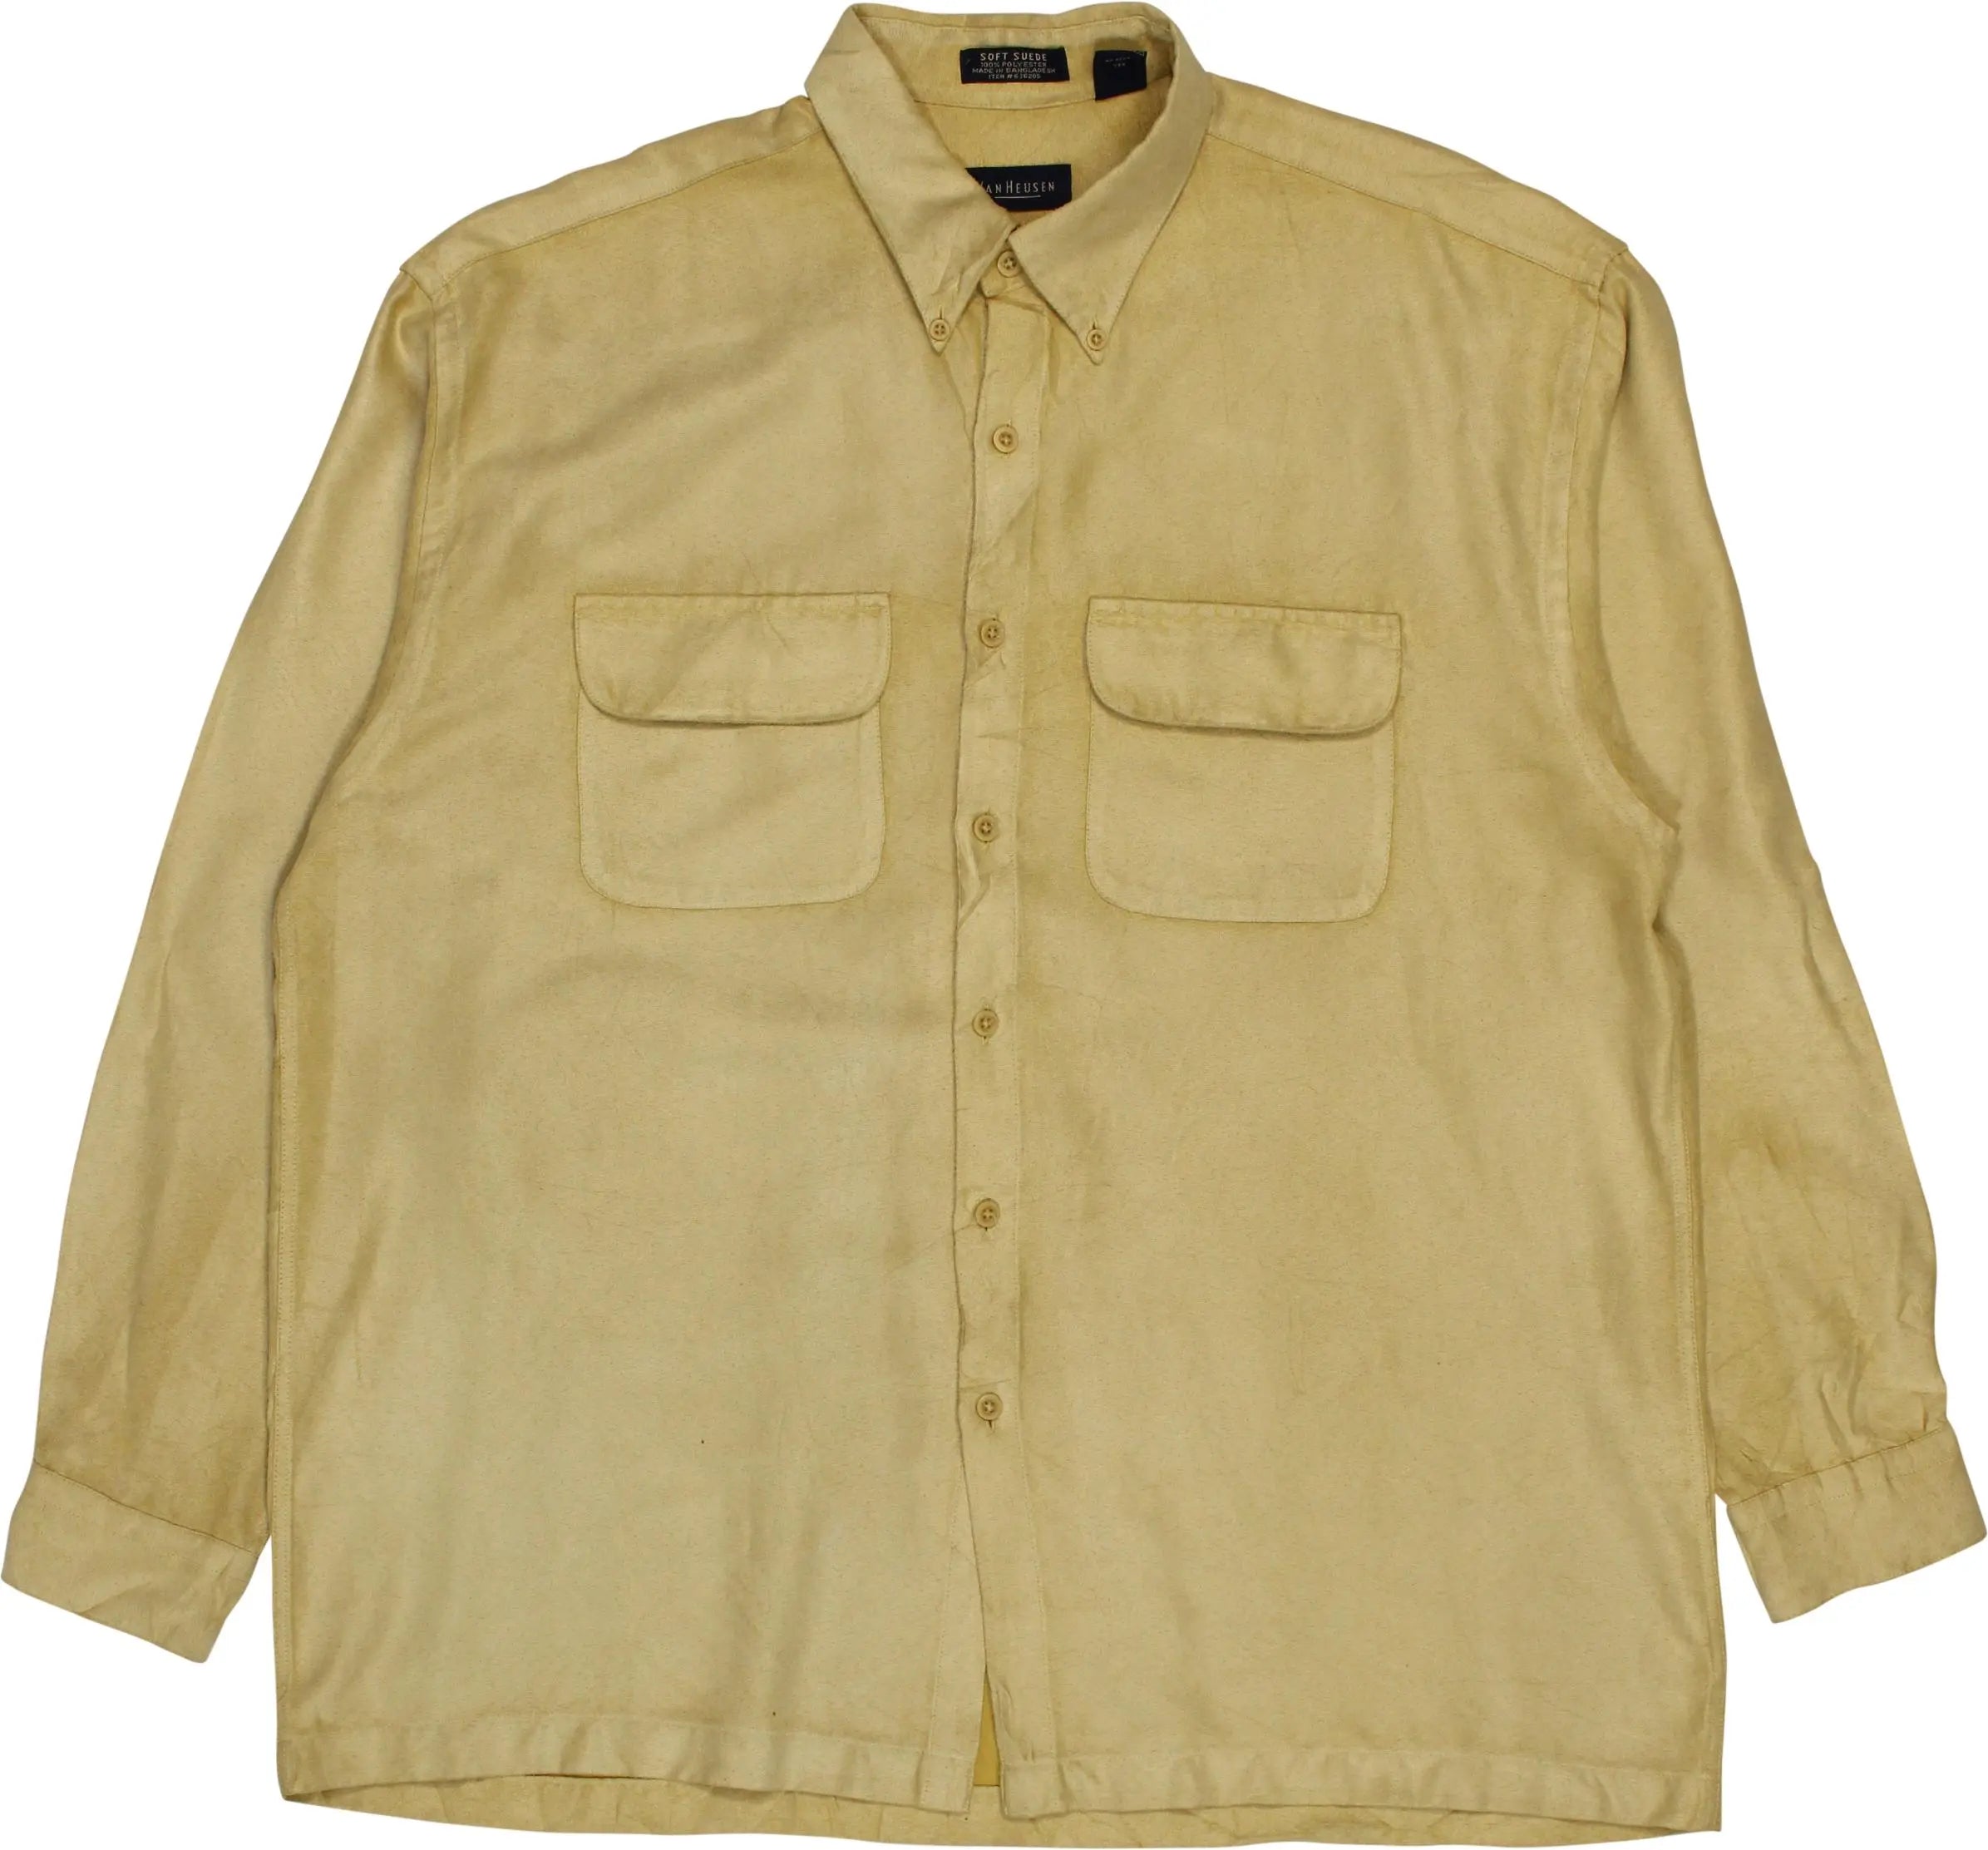 Van Heusen - Beige Shirt- ThriftTale.com - Vintage and second handclothing